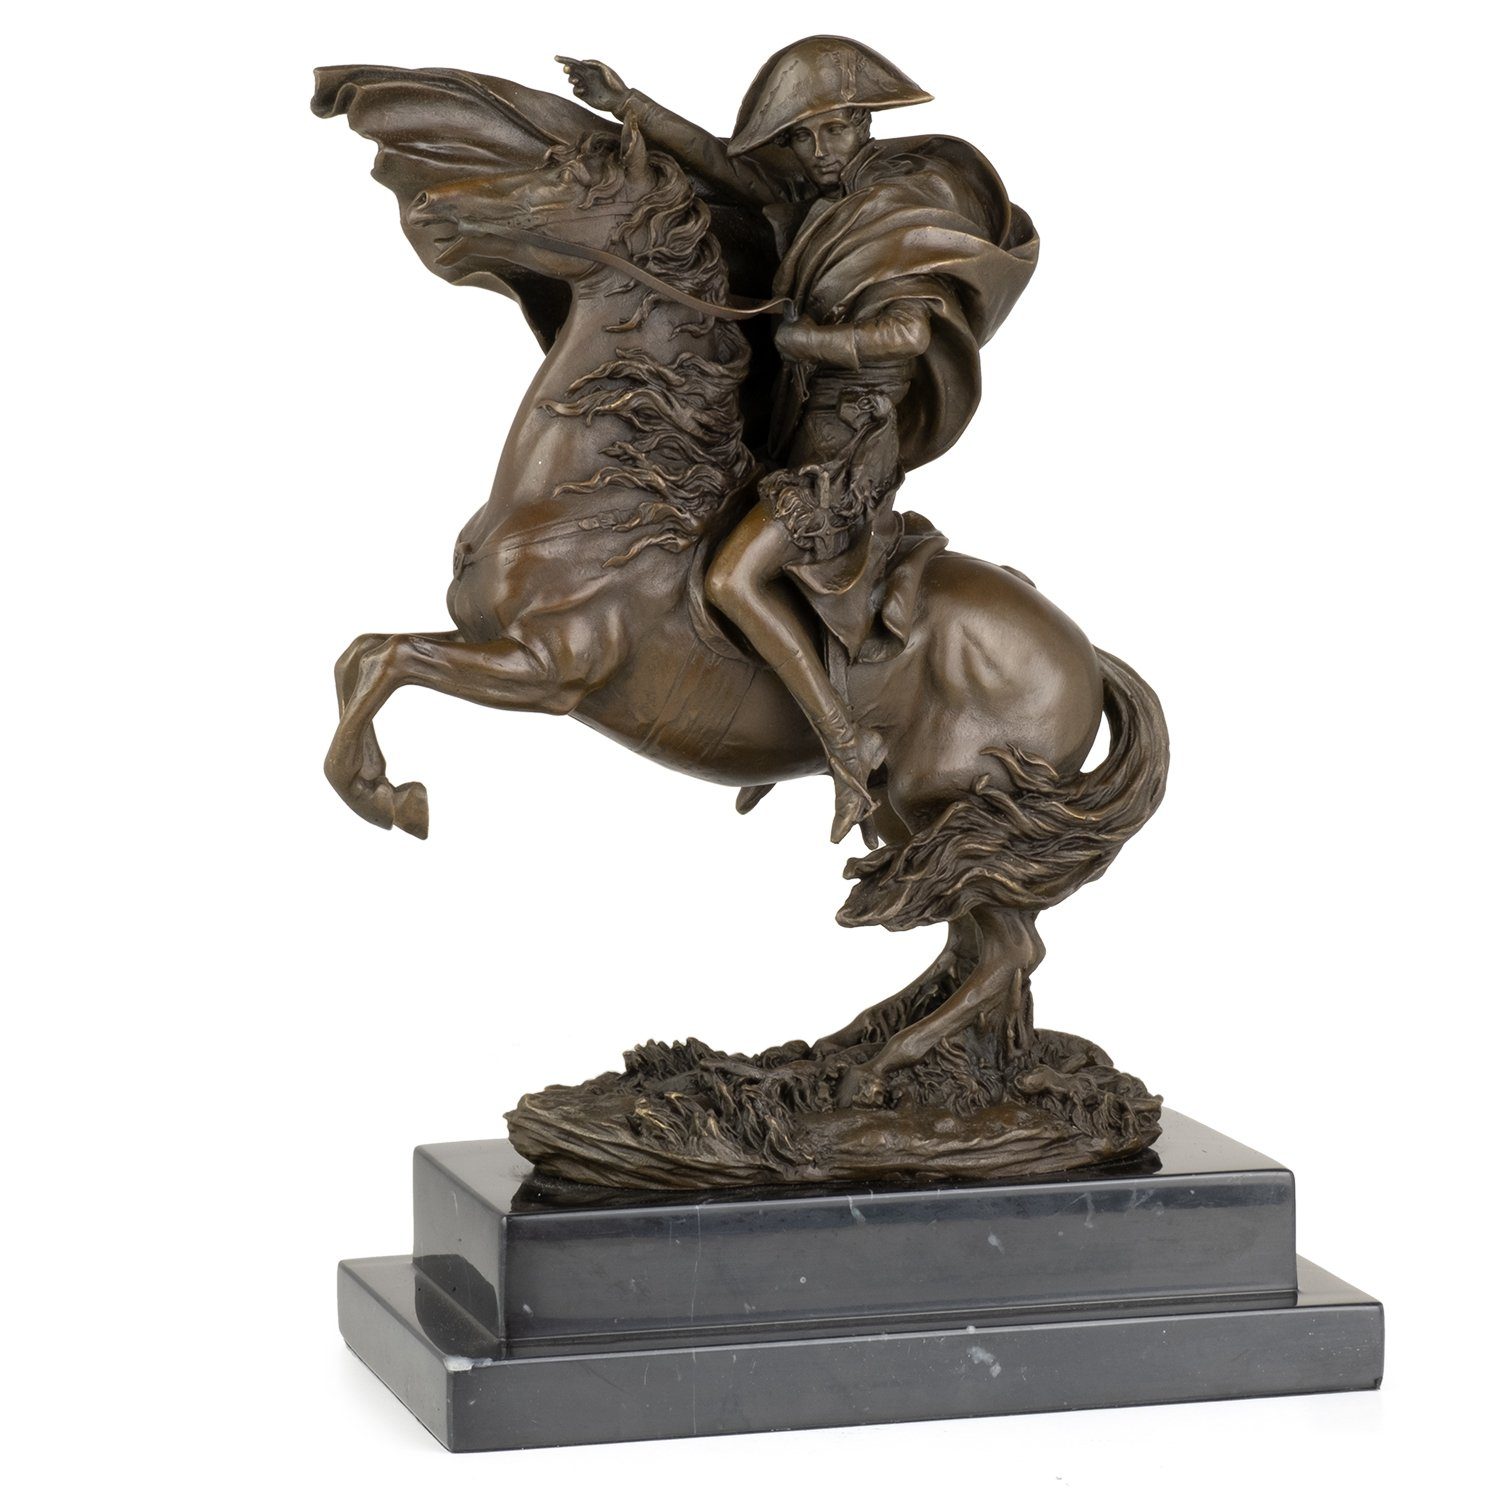 Moritz Skulptur Bronzefigur Napoleon Bonaparte Reiter, Figuren Statue Skulpturen Antik-Stil